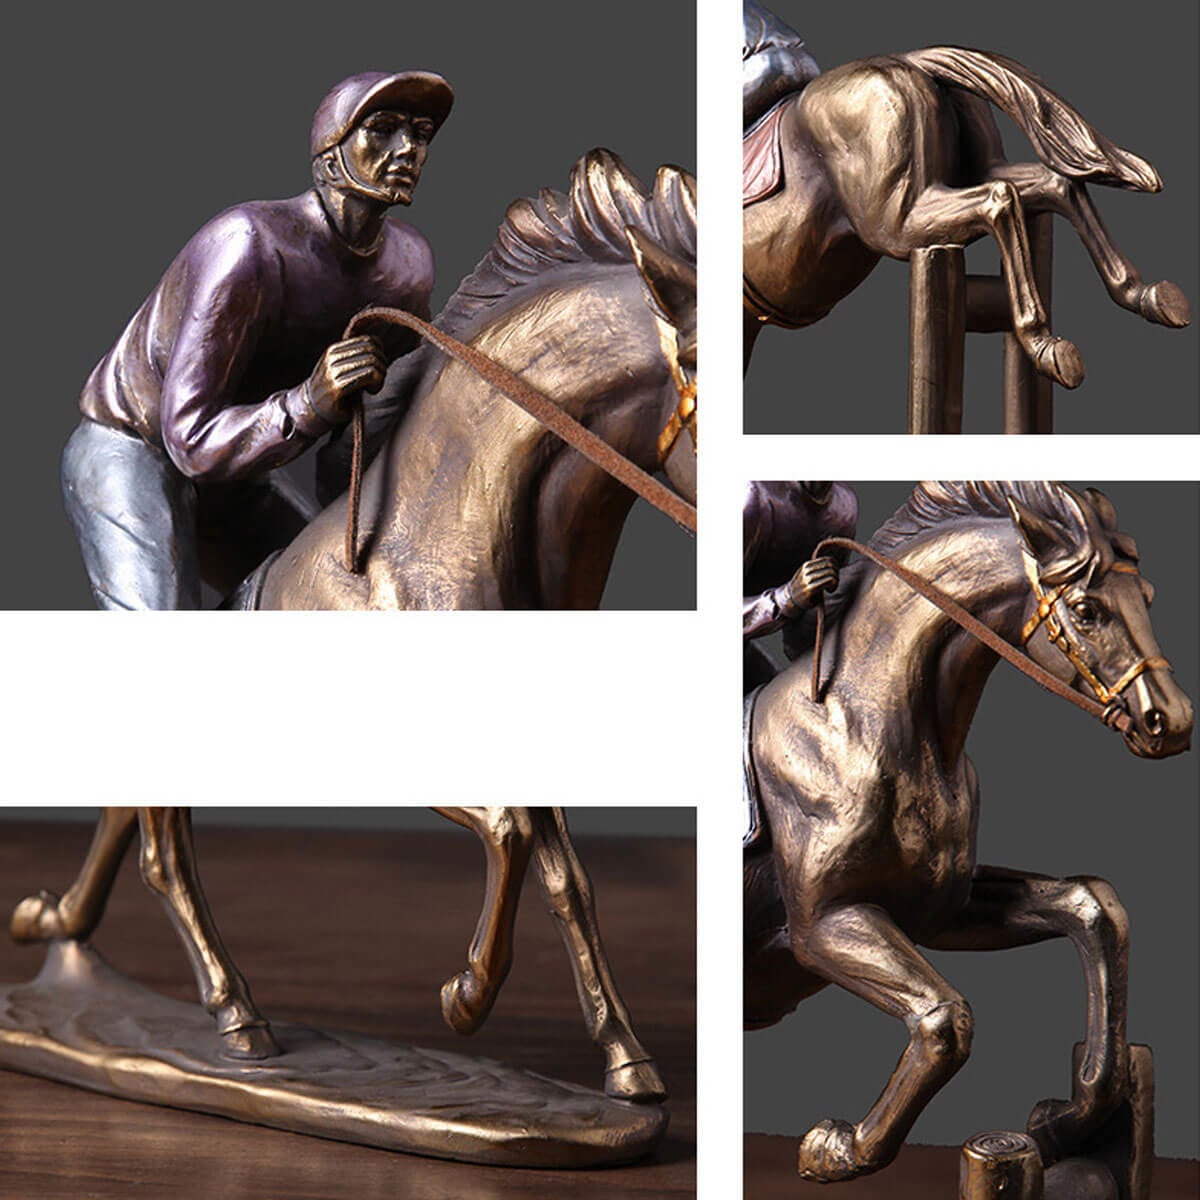 Horse Racing Sculpture Figurine Running Horse Vintage